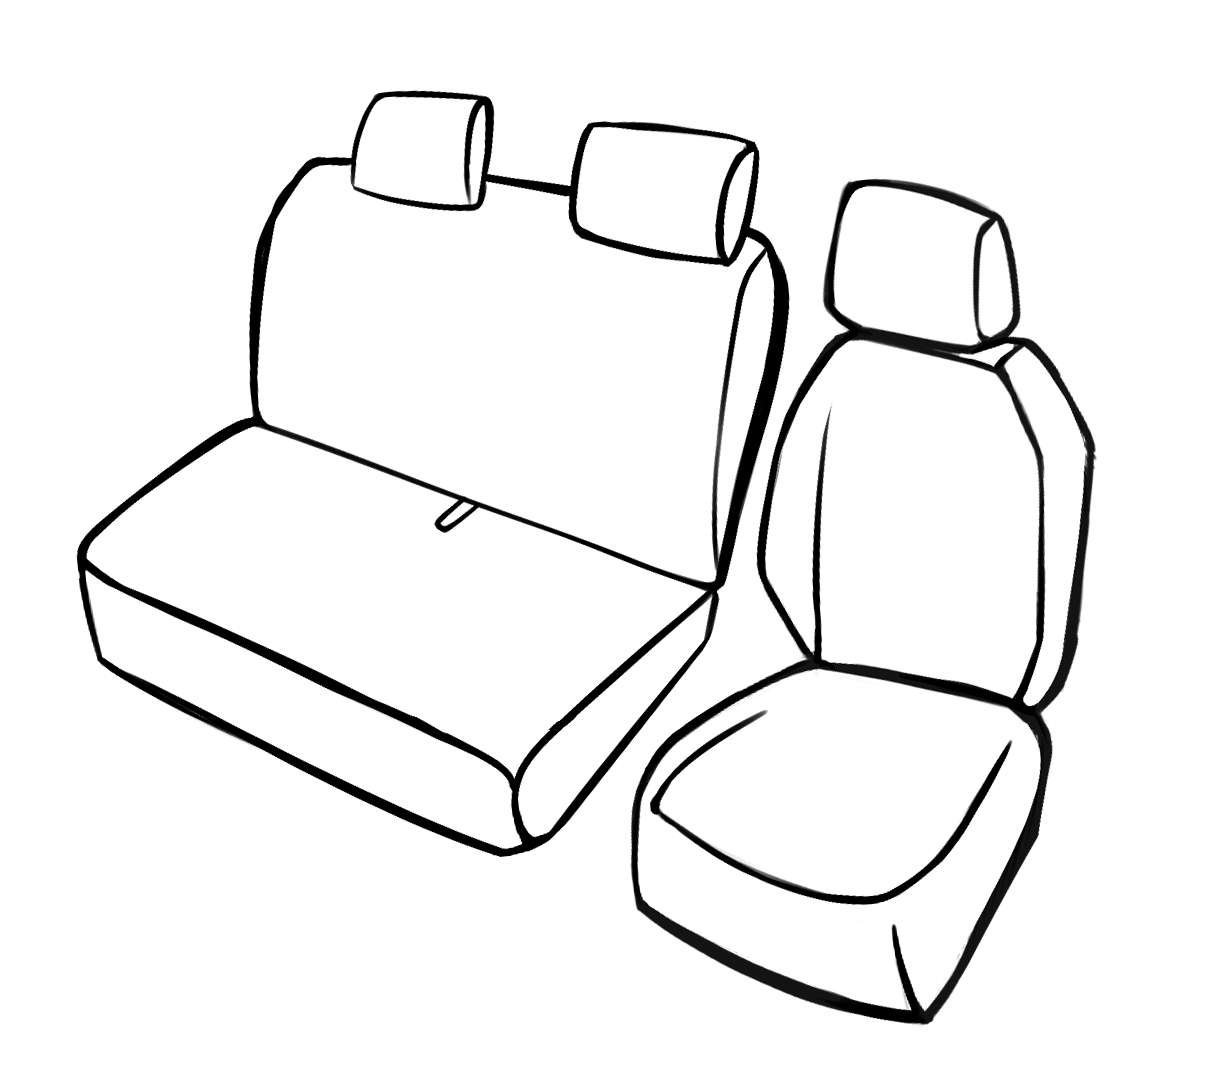 Seat cover made of imitation leather for Renault Trafic II, Opel Vivaro, Nissan Primastar, single seat cover, double seat cover